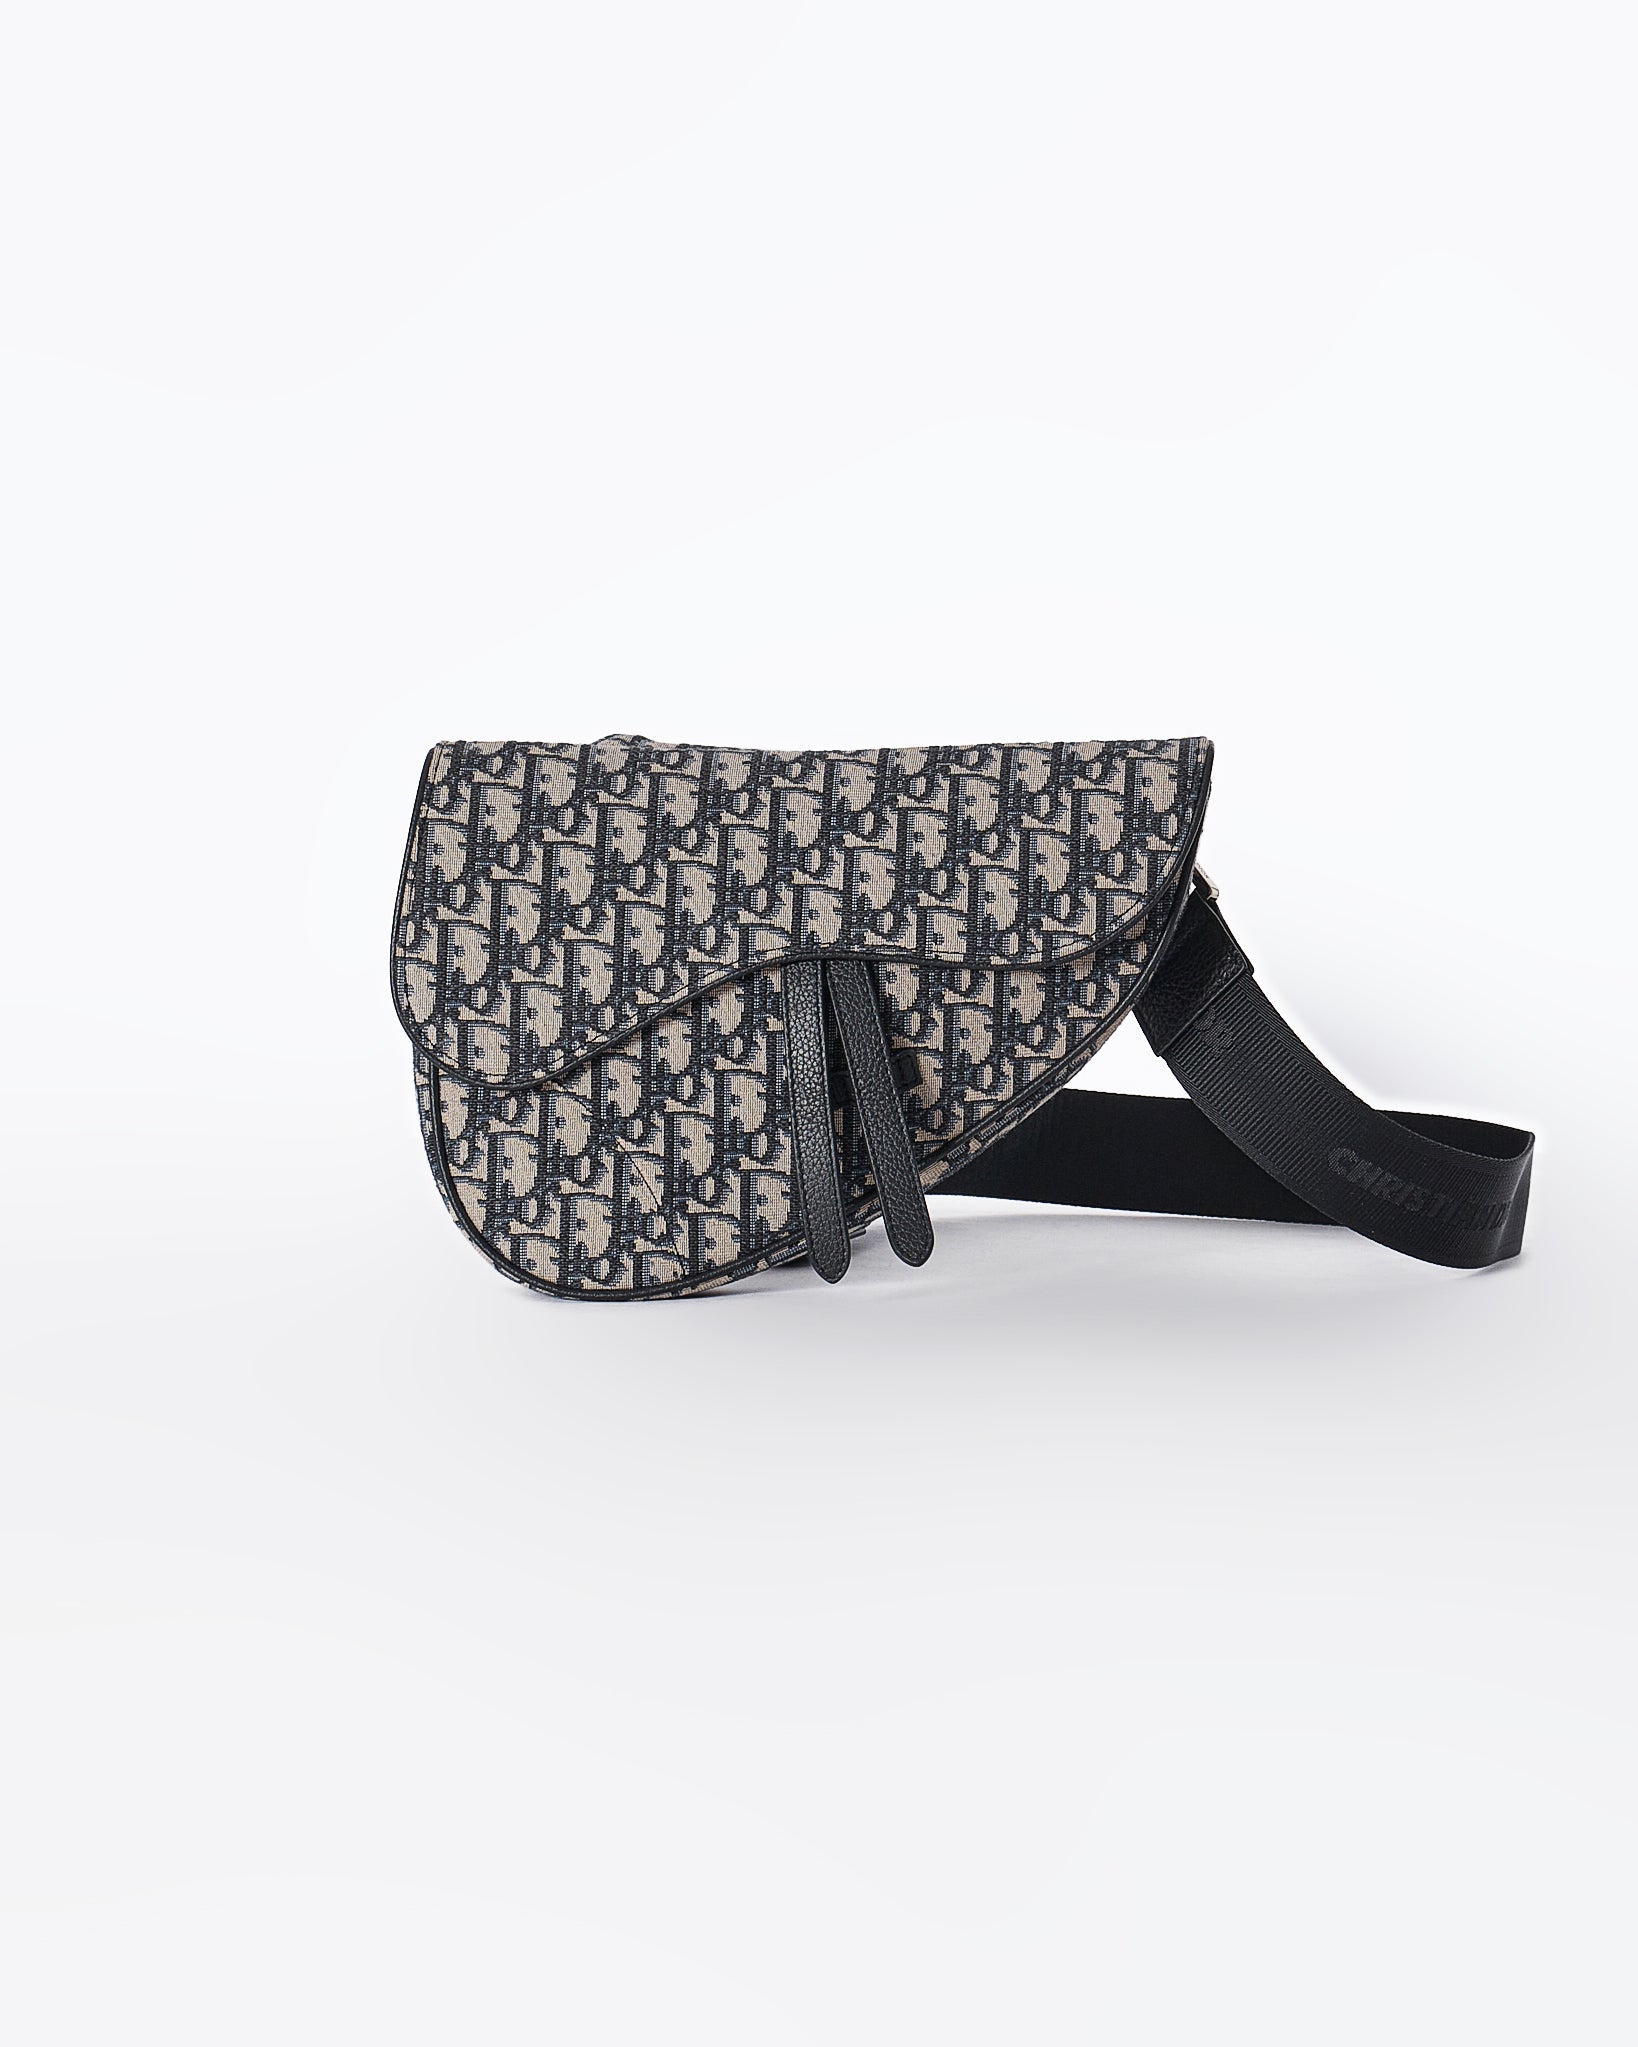 Dior Saddle Bag 219 - MOI OUTFIT